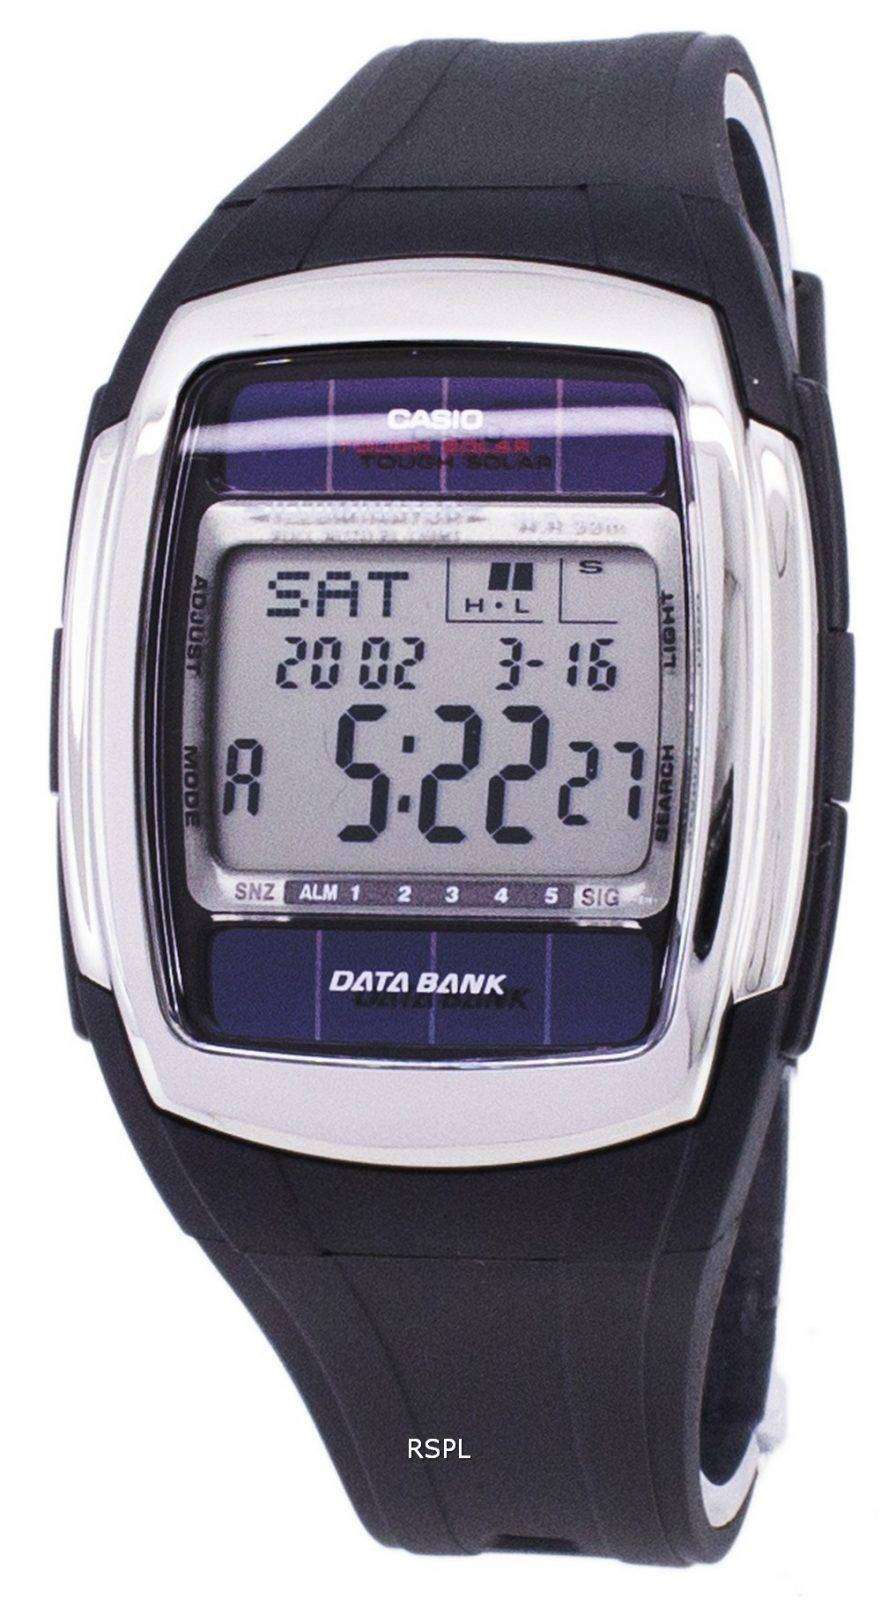 digital watch multiple countdown timers